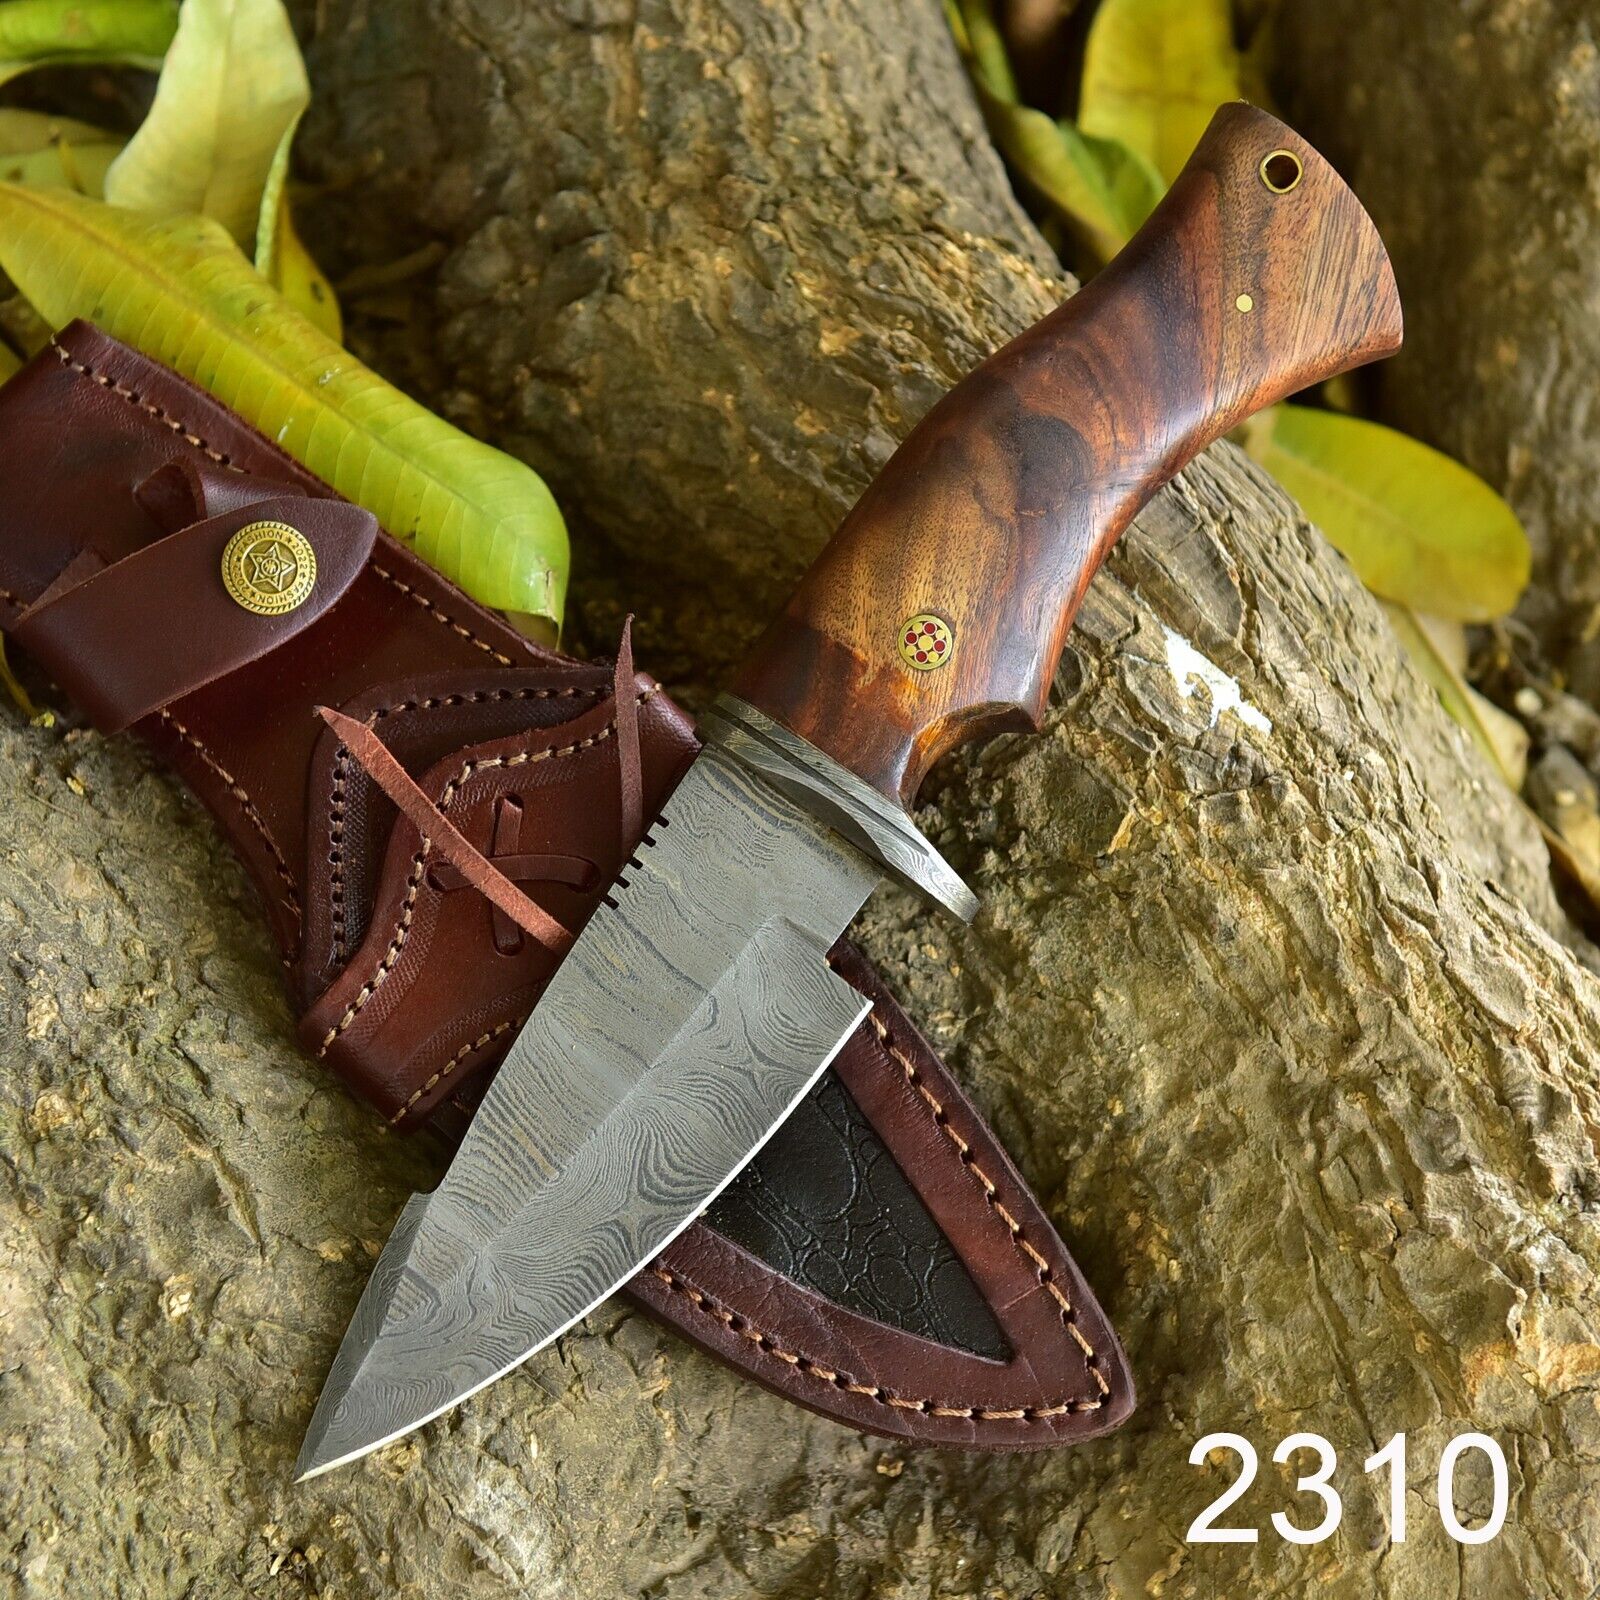 .Custom Handmade Hunting Bushcraft Knife Forged Damascus Steel Survival EDC 10”